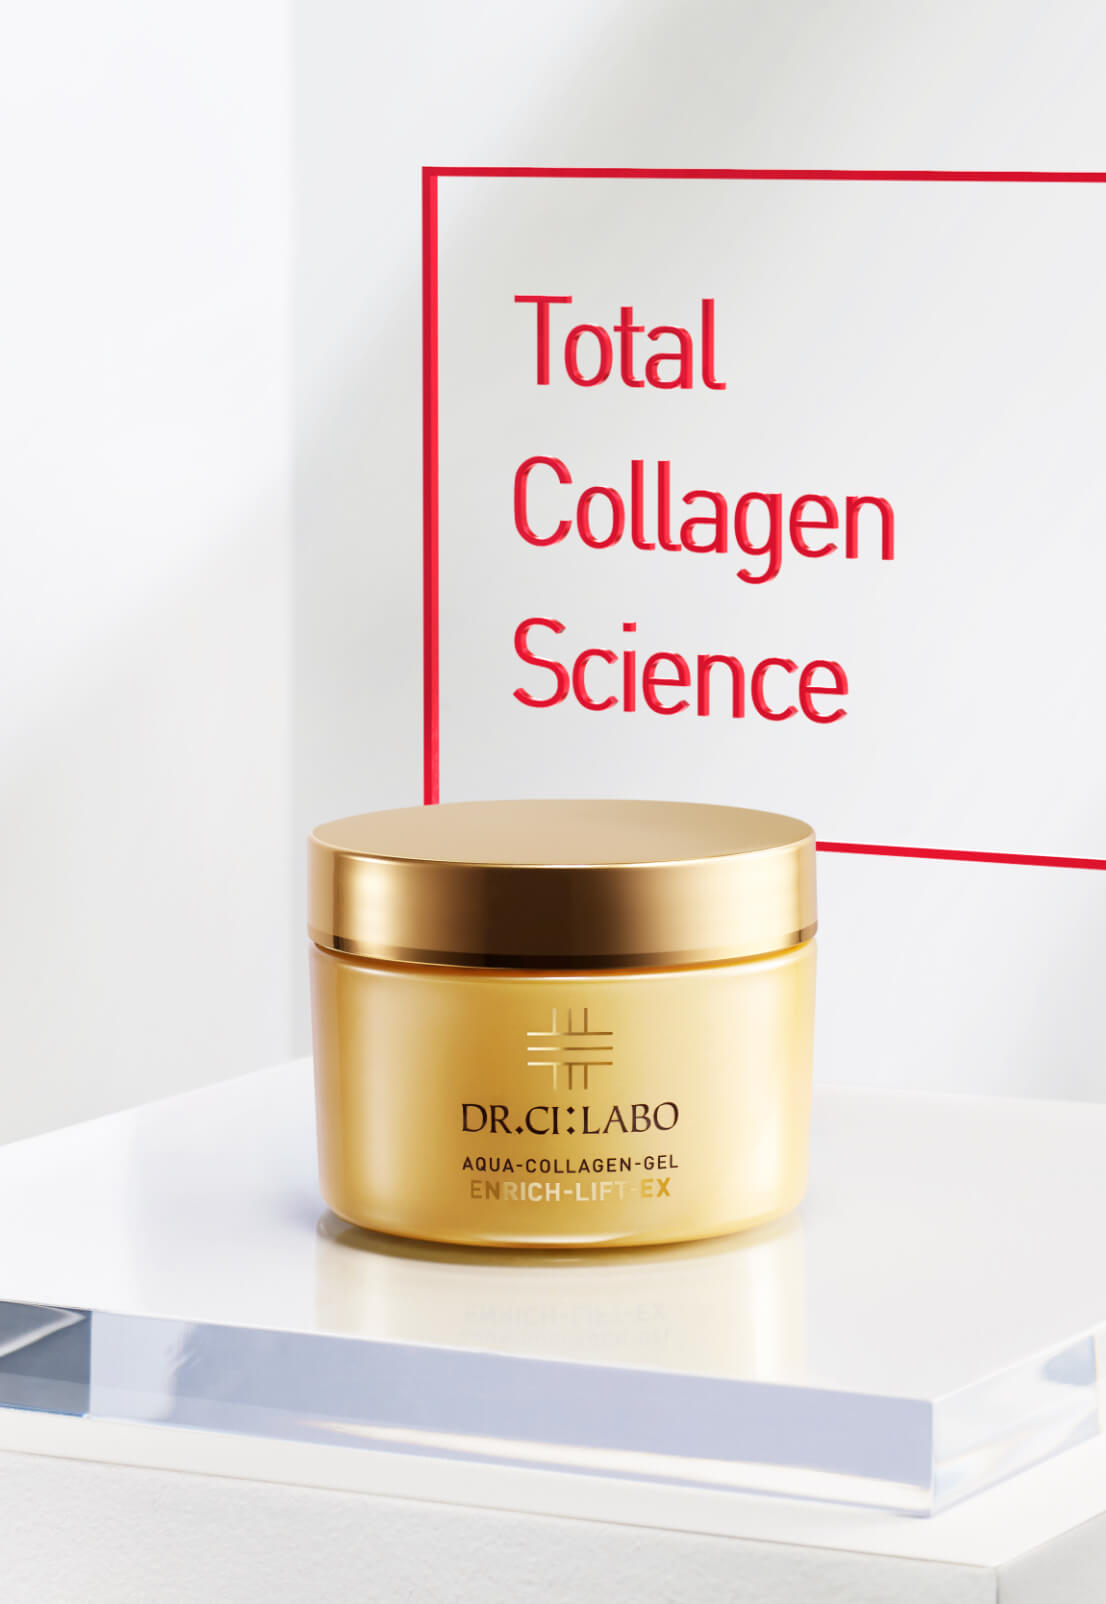 Total Collagen Science